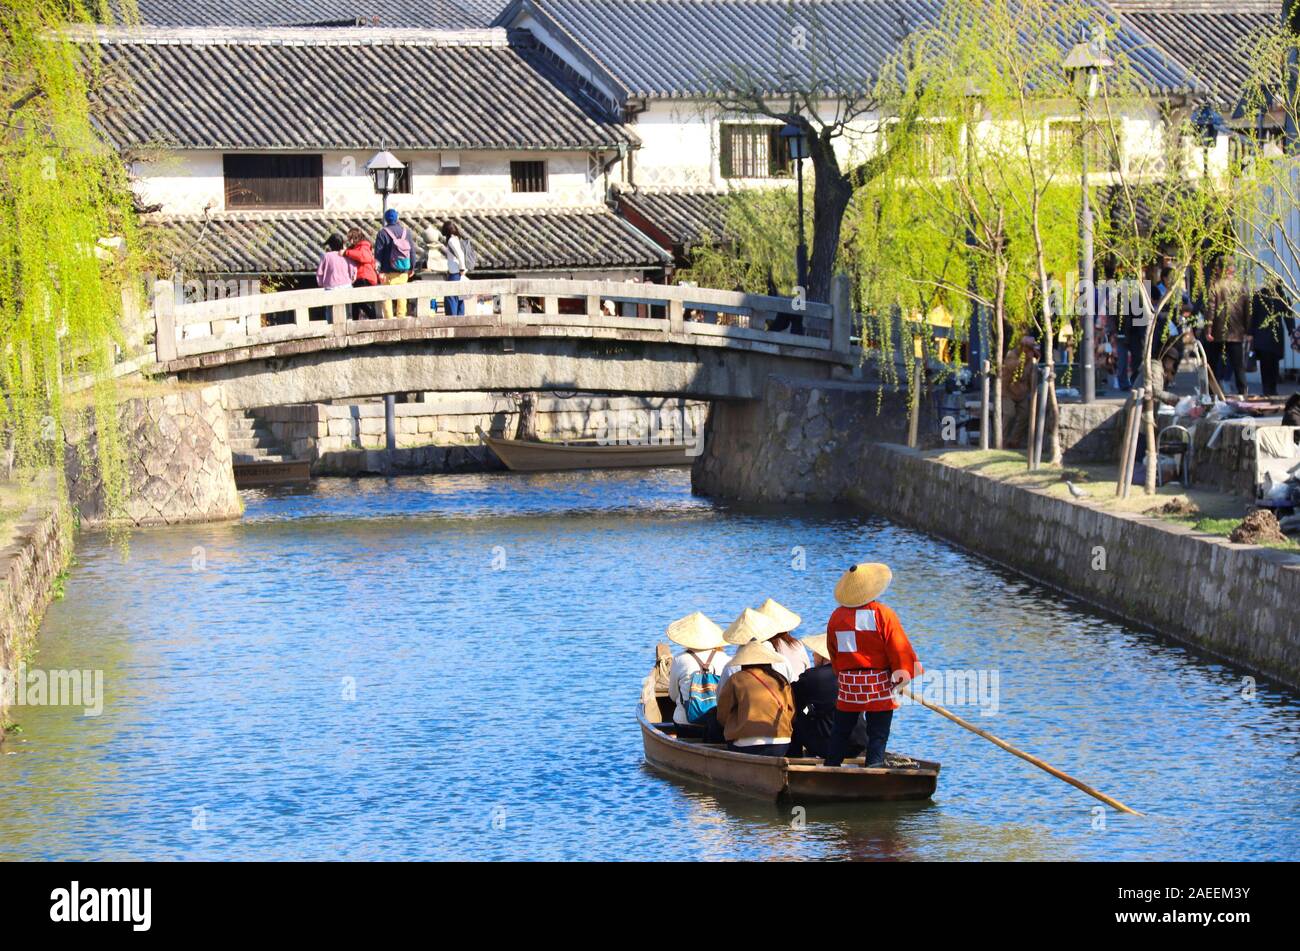 Les touristes en bateau à l'ancienne, Kurashiki Bikan, quartier canal inn Kurashiki City, Japon Banque D'Images